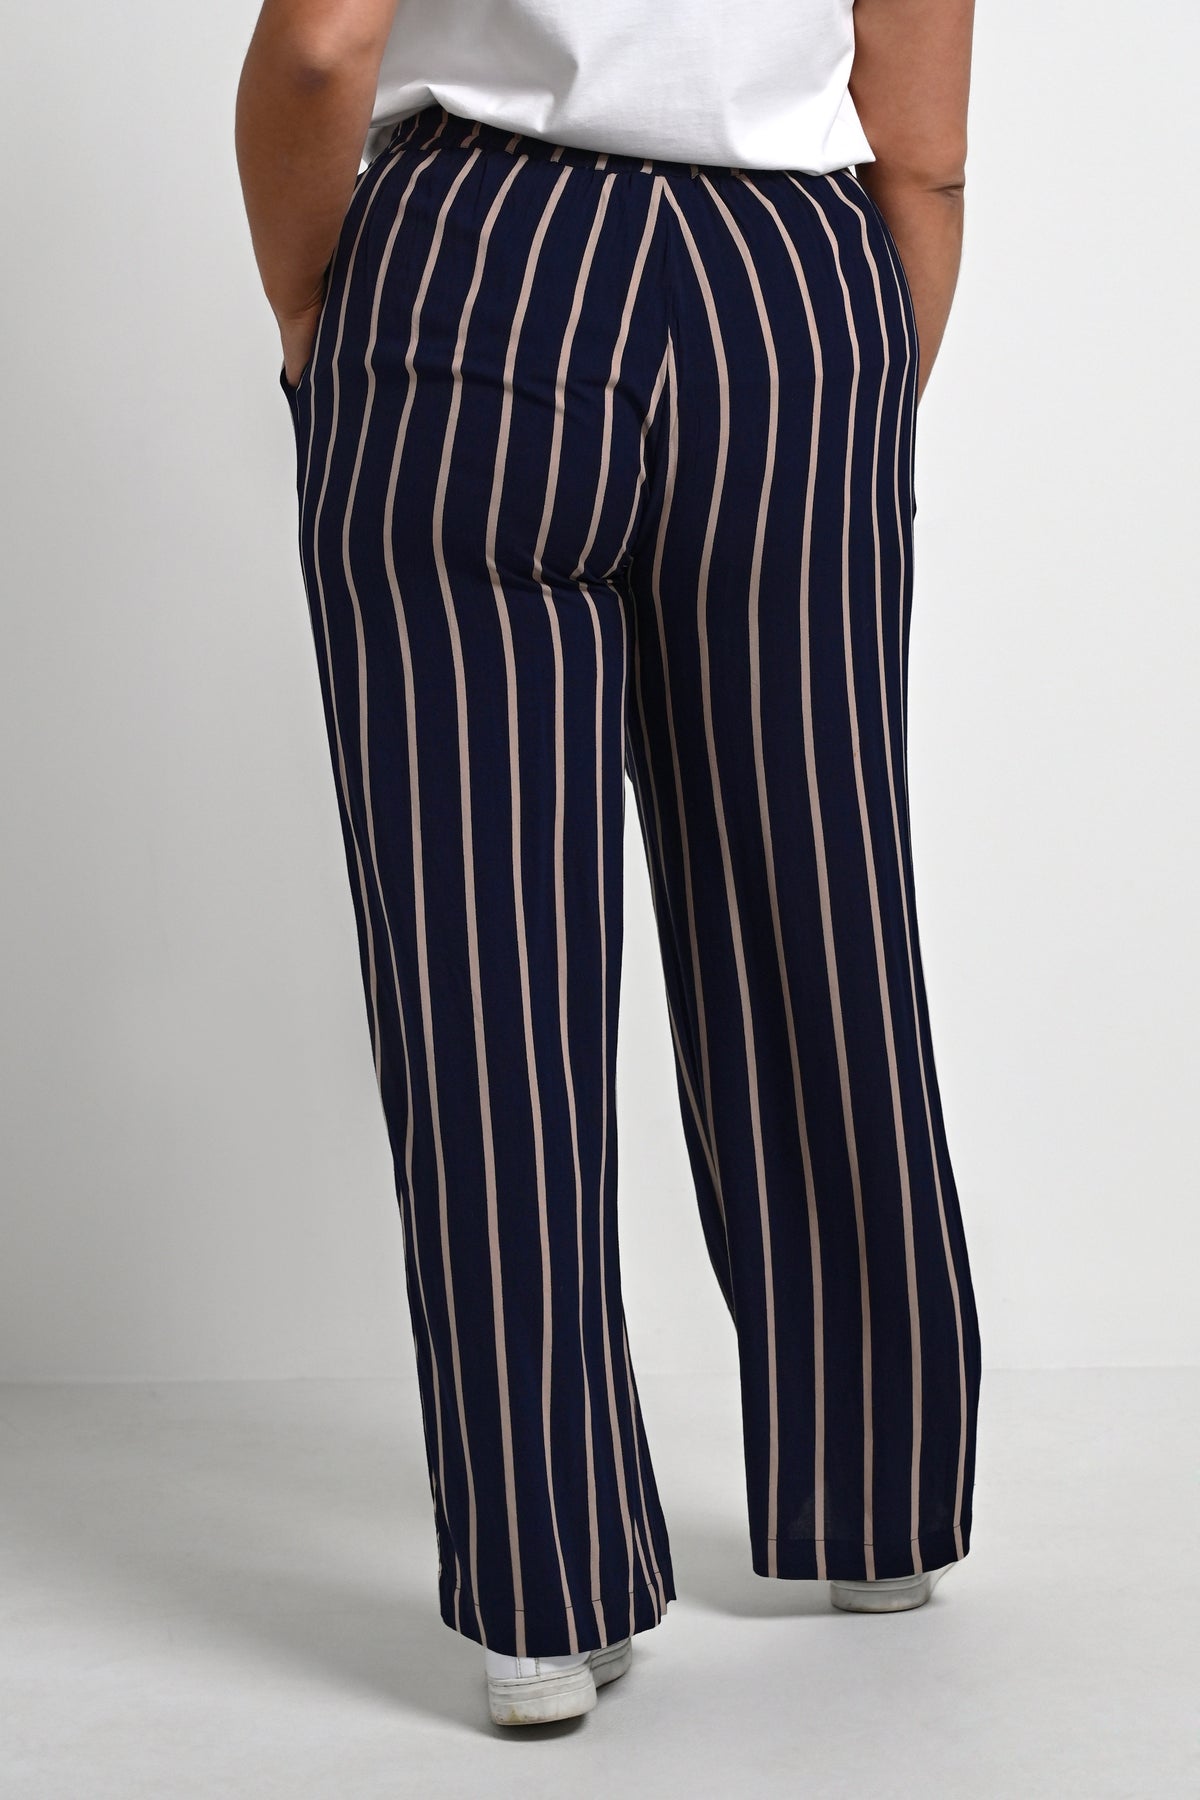 Gemma Striped Pants